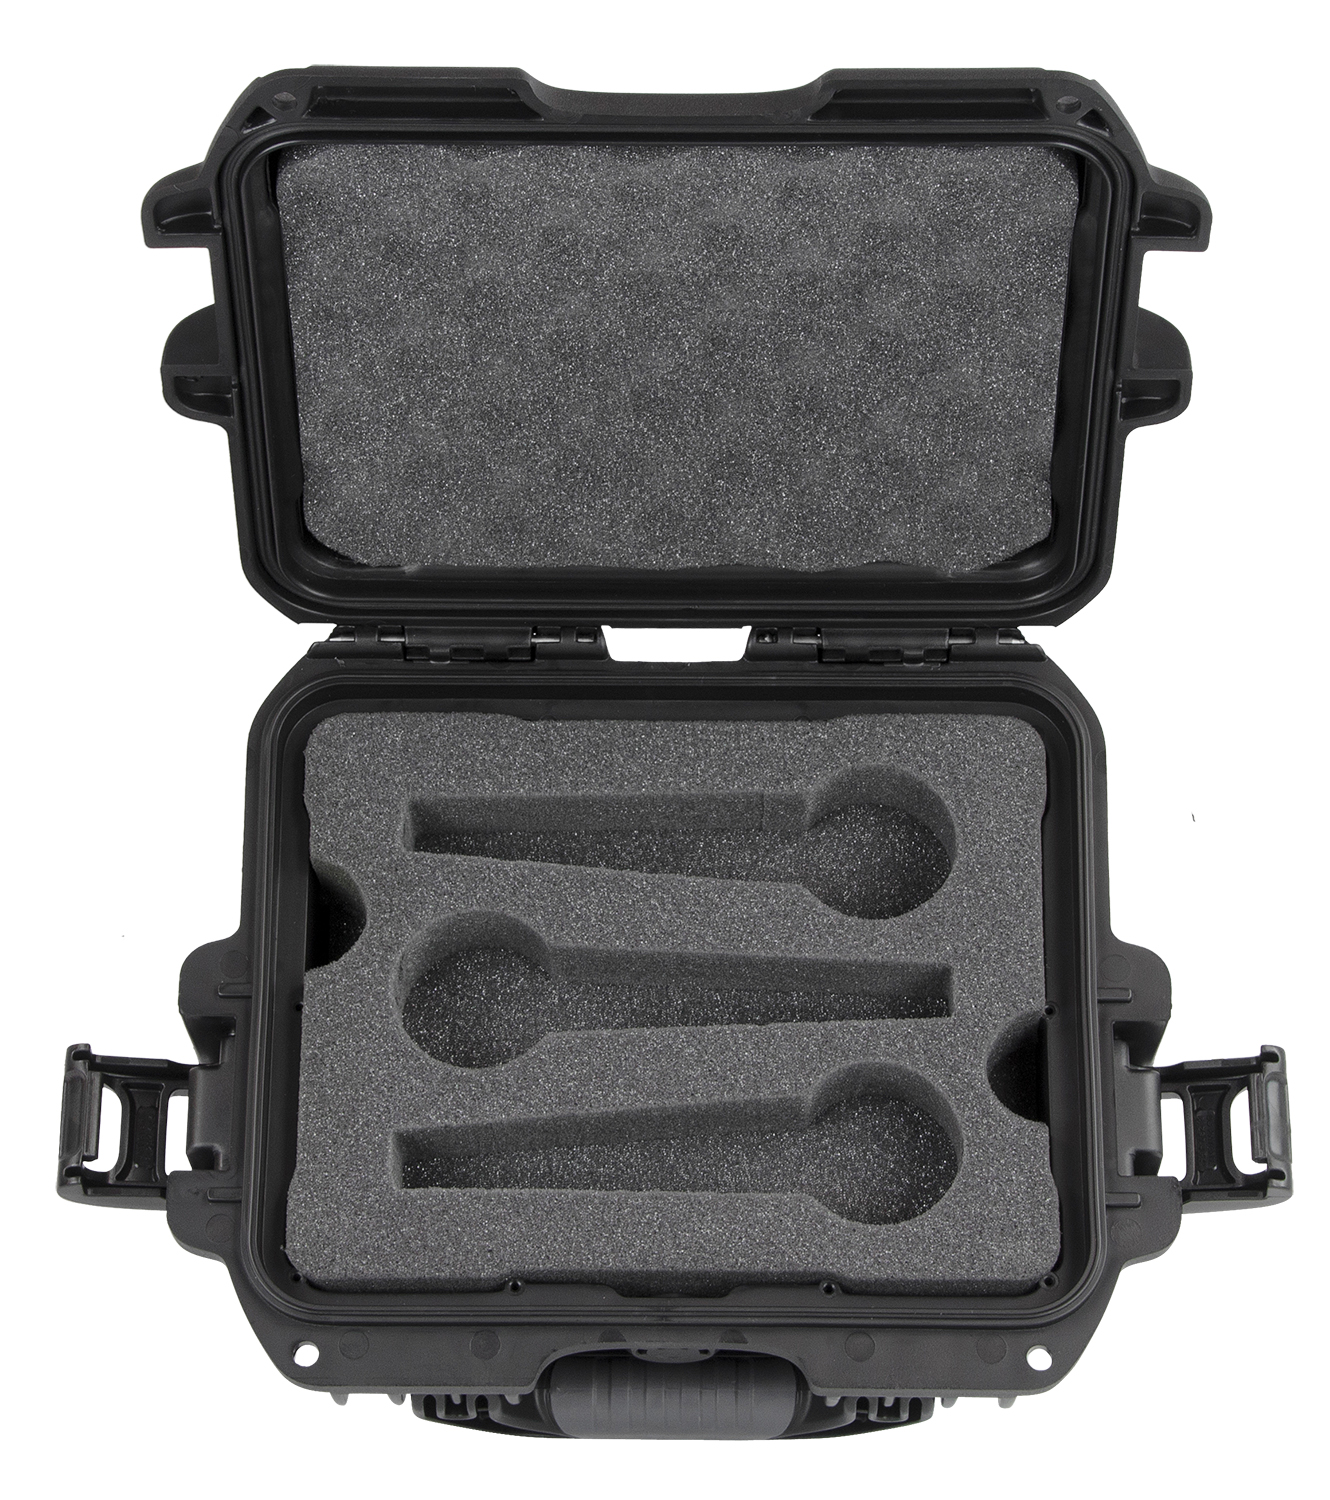 Waterproof mic case-6 mics-GM-06-MIC-WP